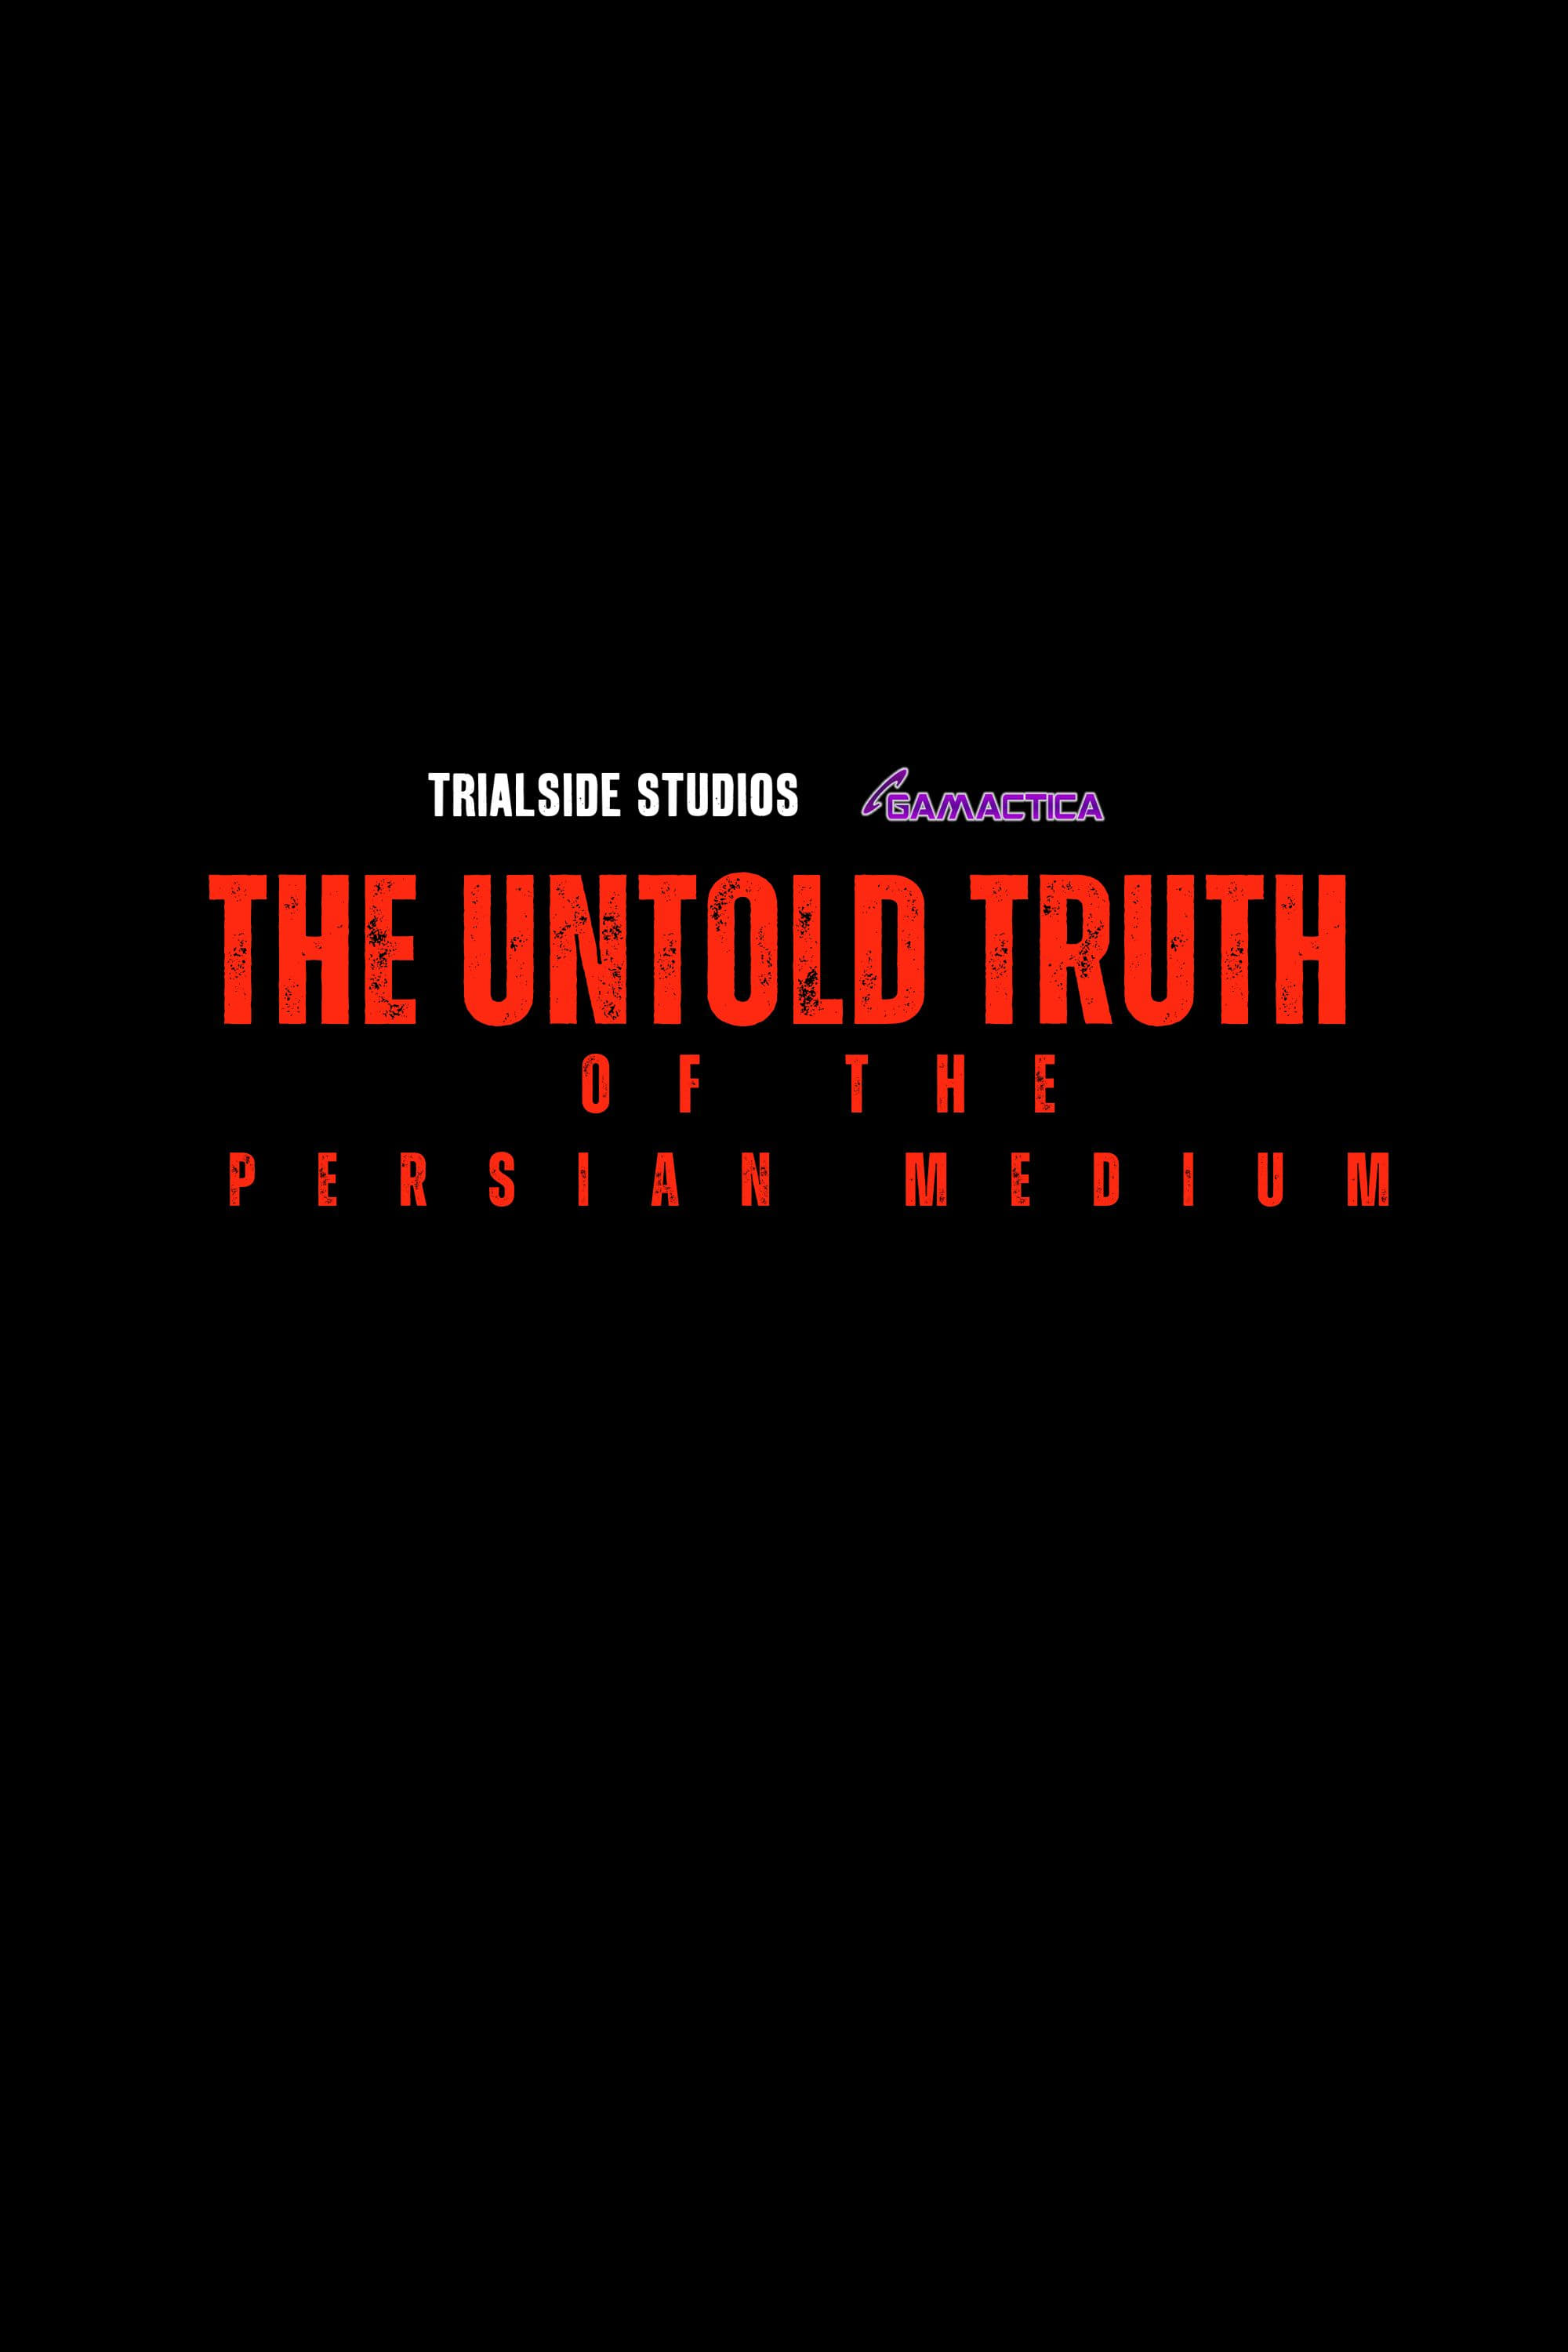 The Untold truth of The Persian Medium